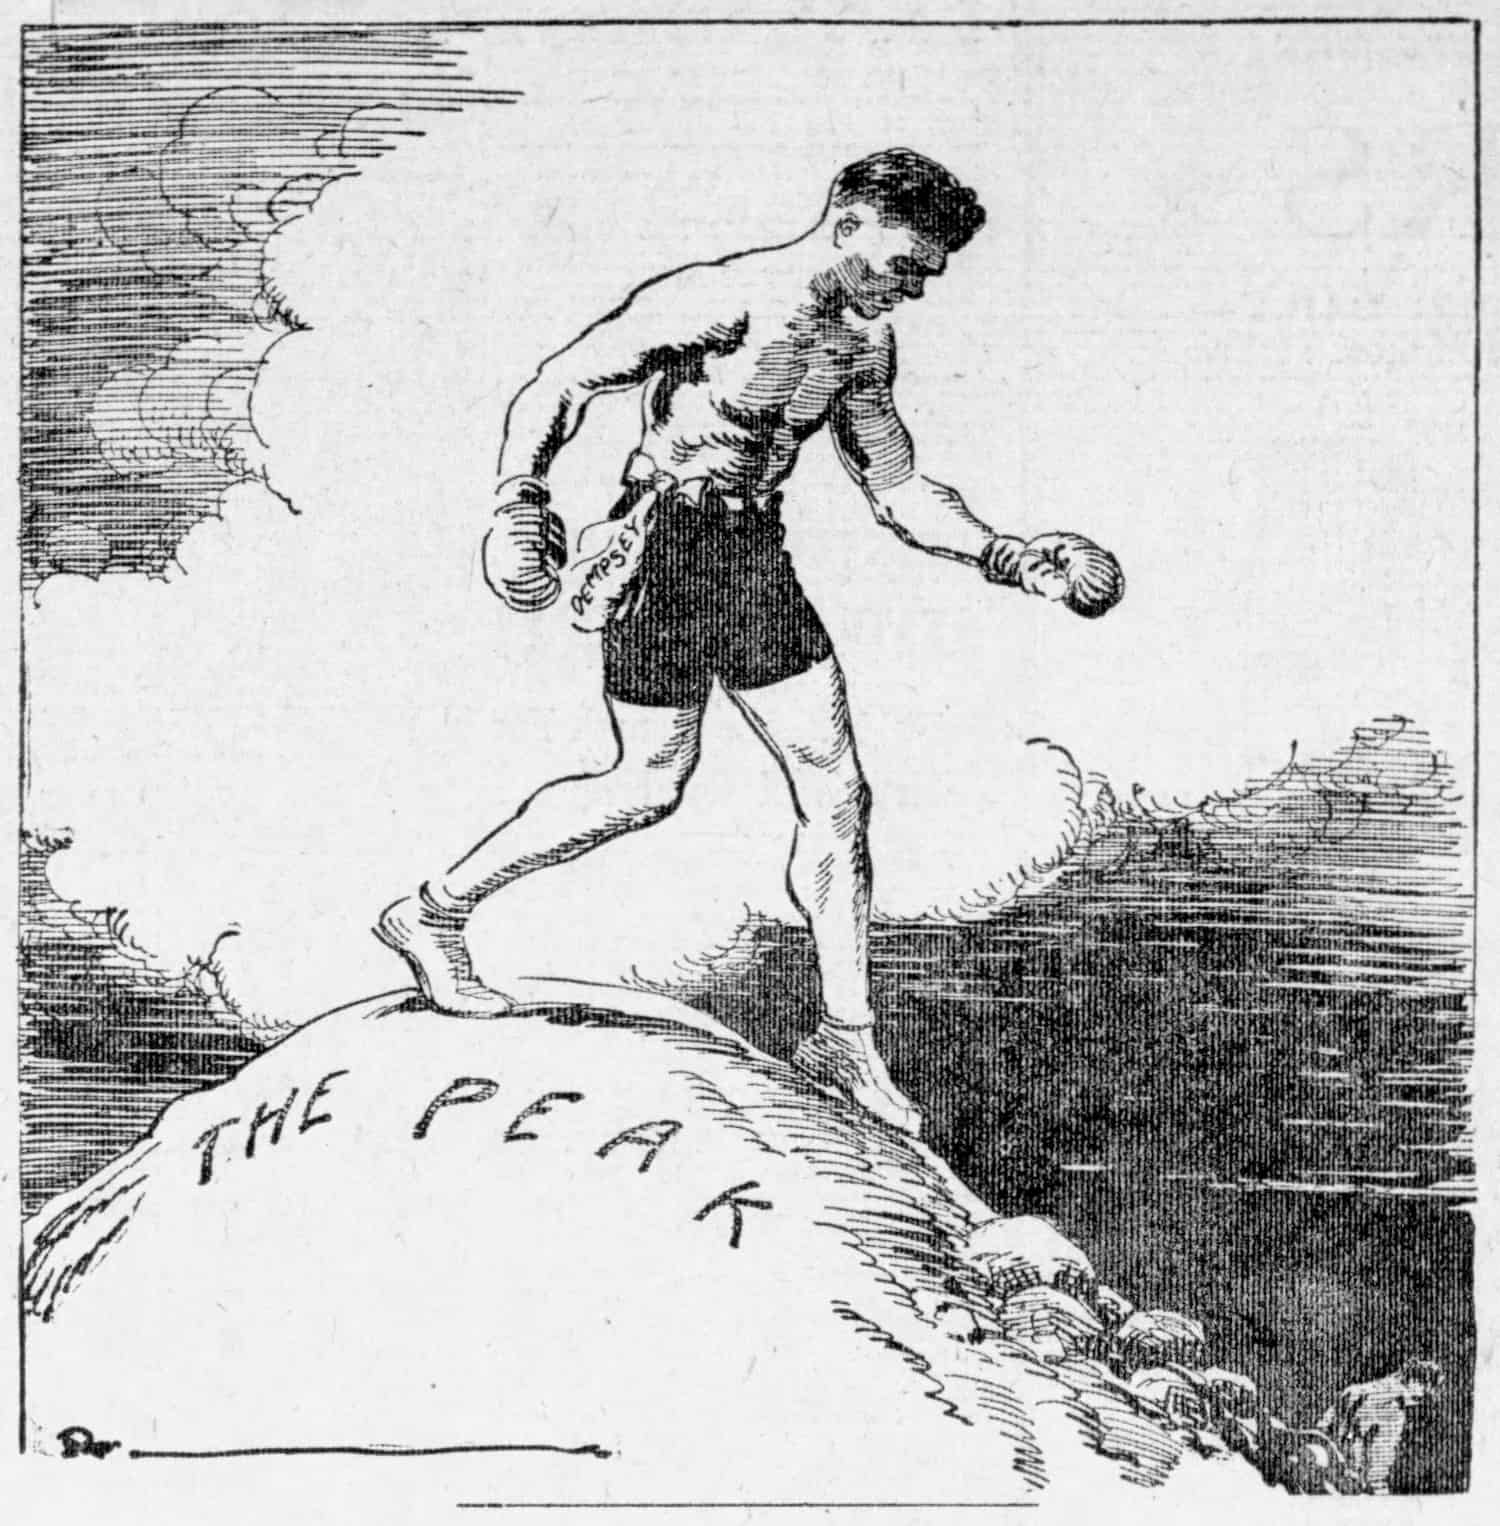 Illustration of Jack Dempsey walking over a hill